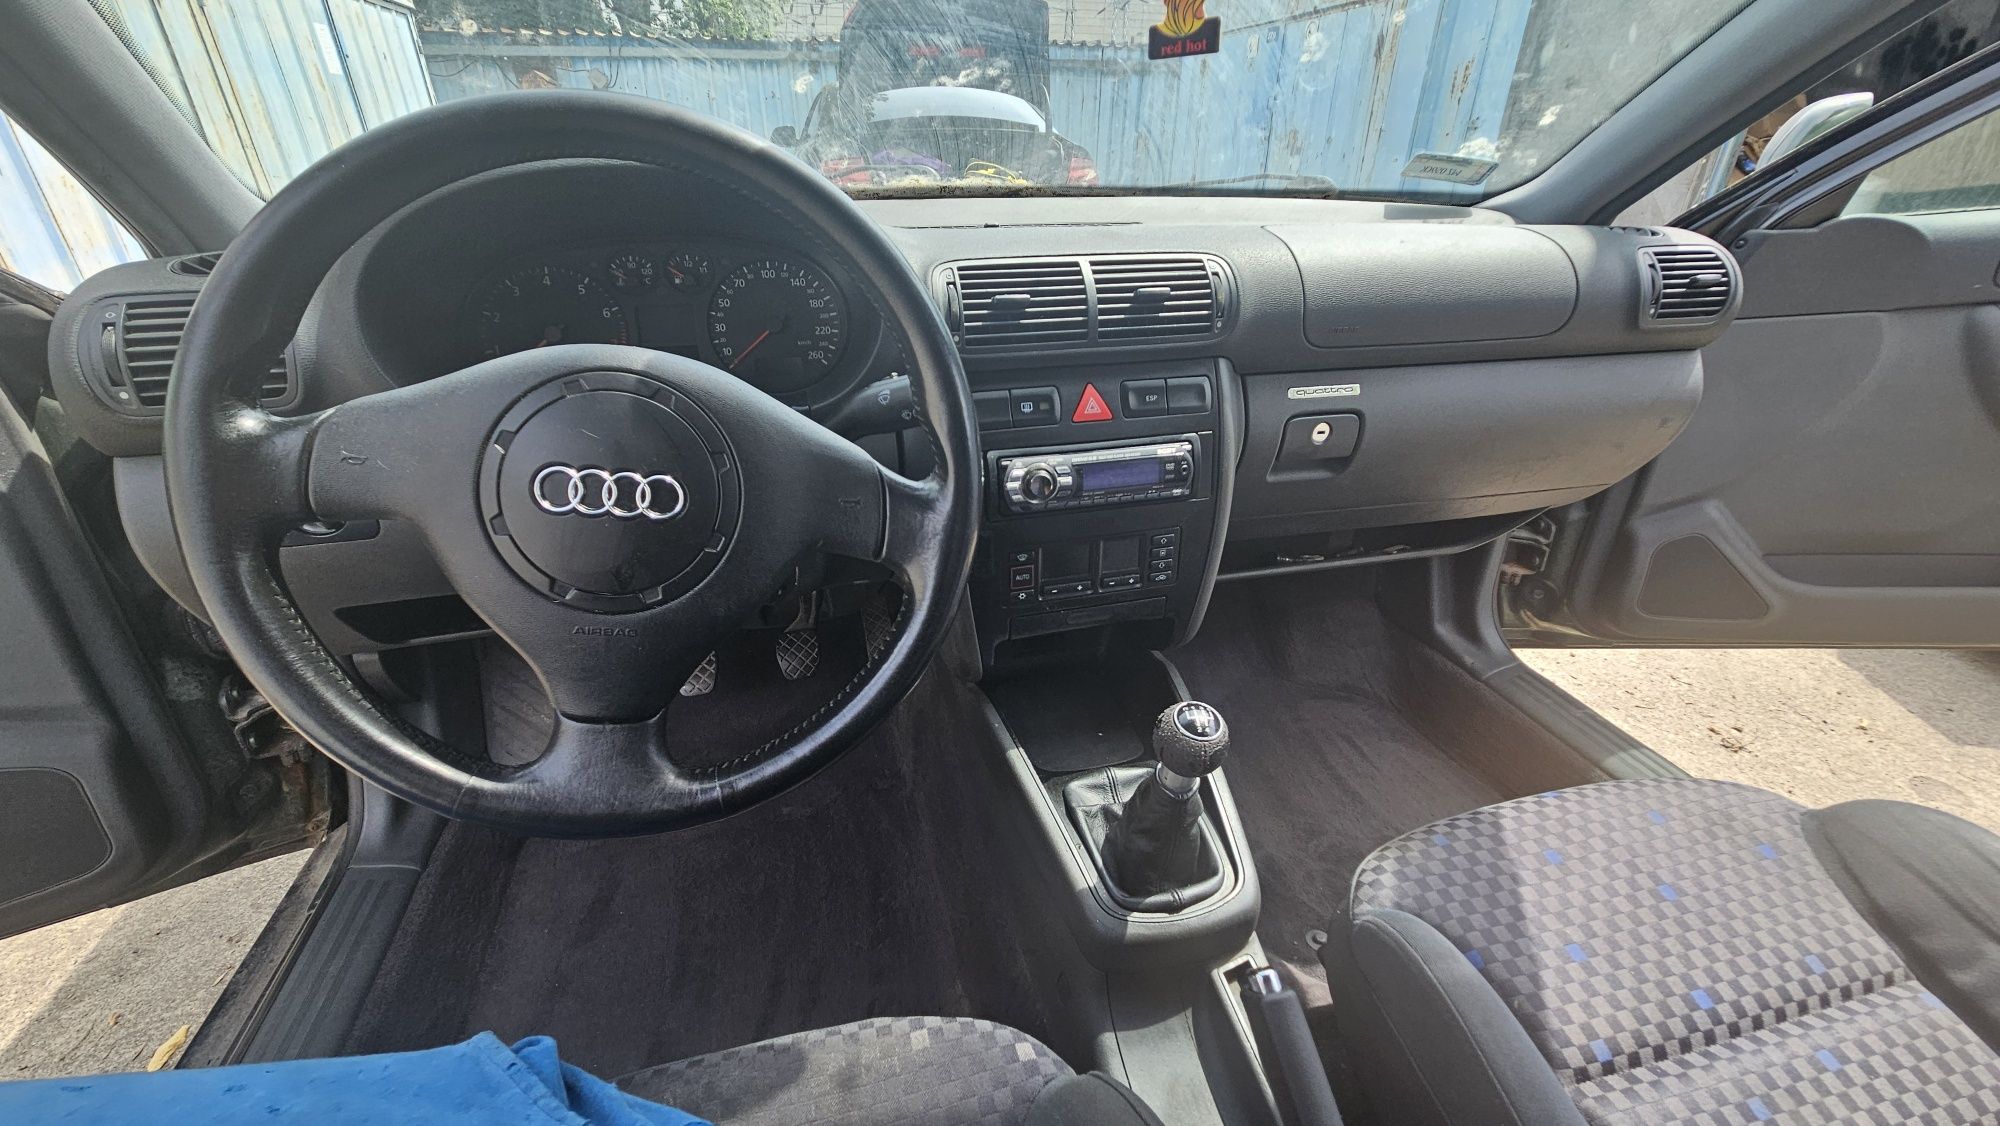 Audi a3 8l 1.8t quattro